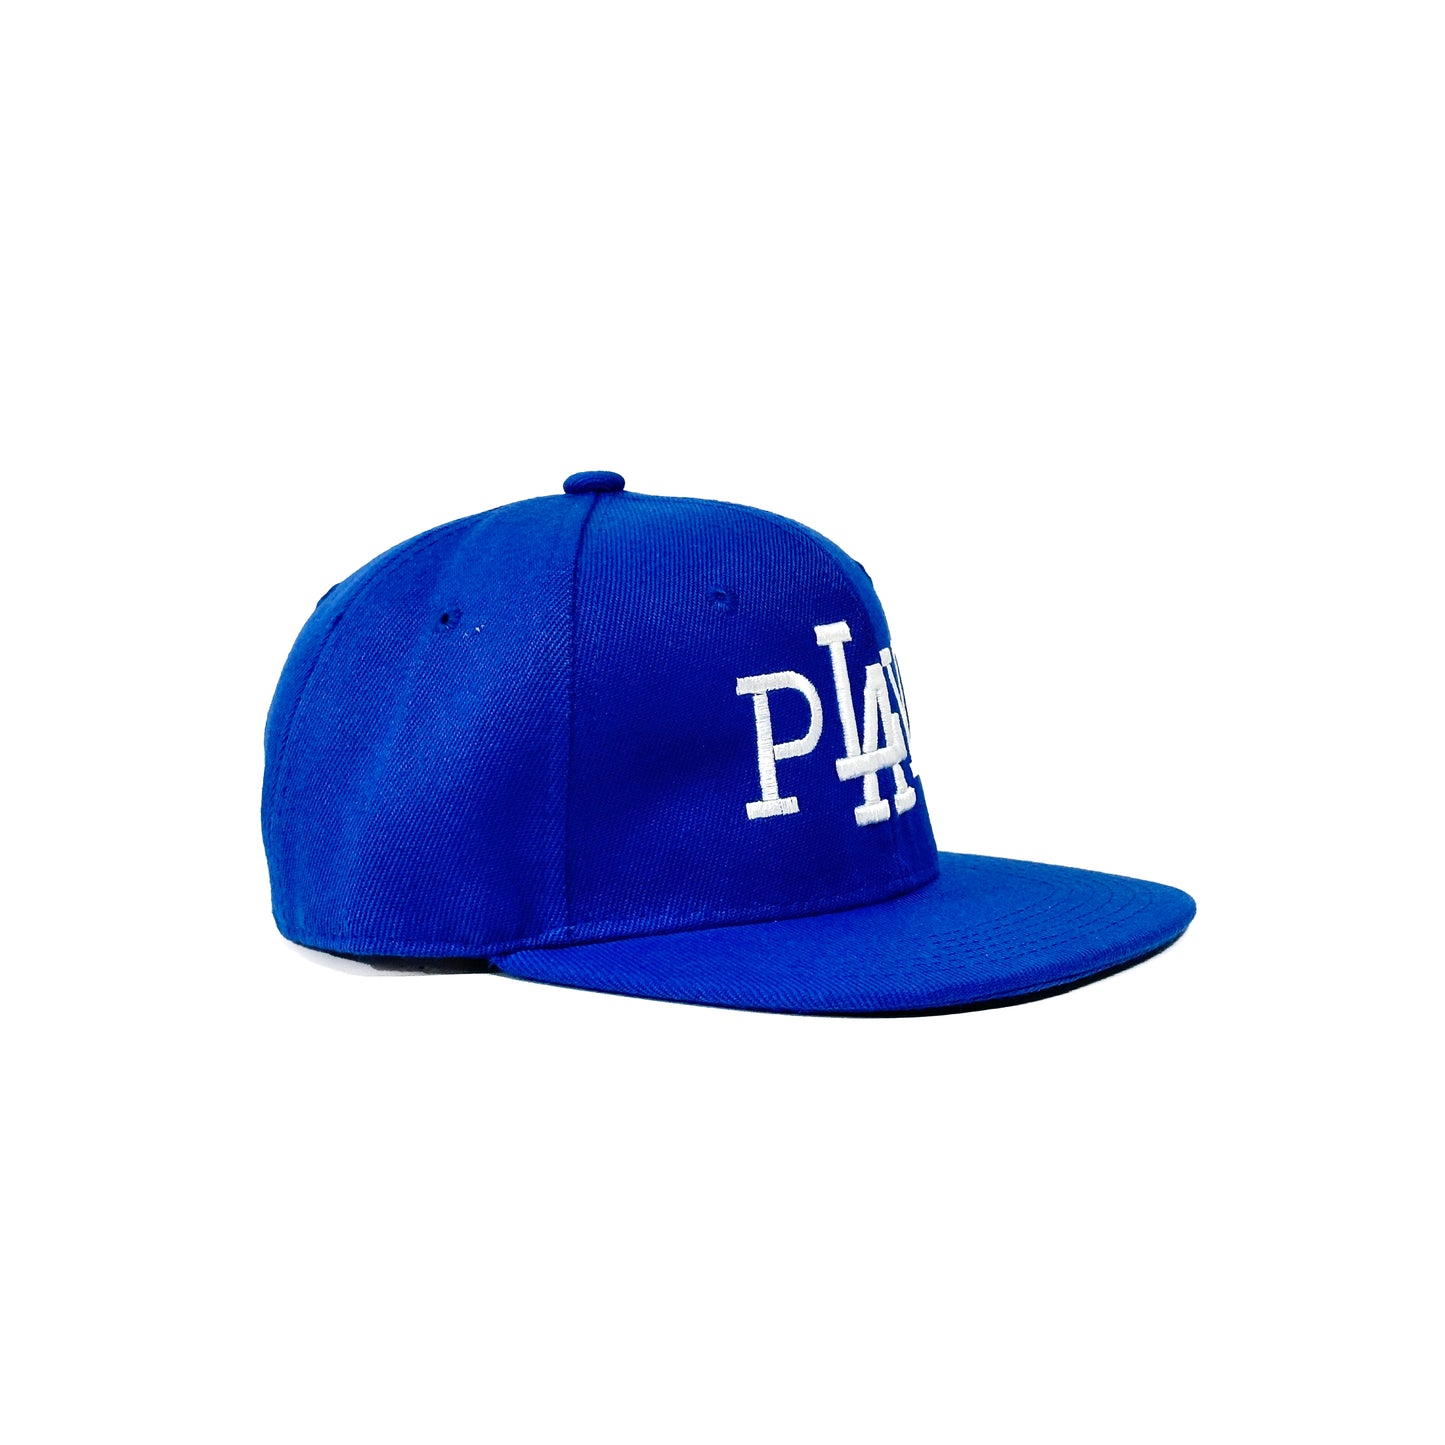 Youth pLAy Snapback Hat